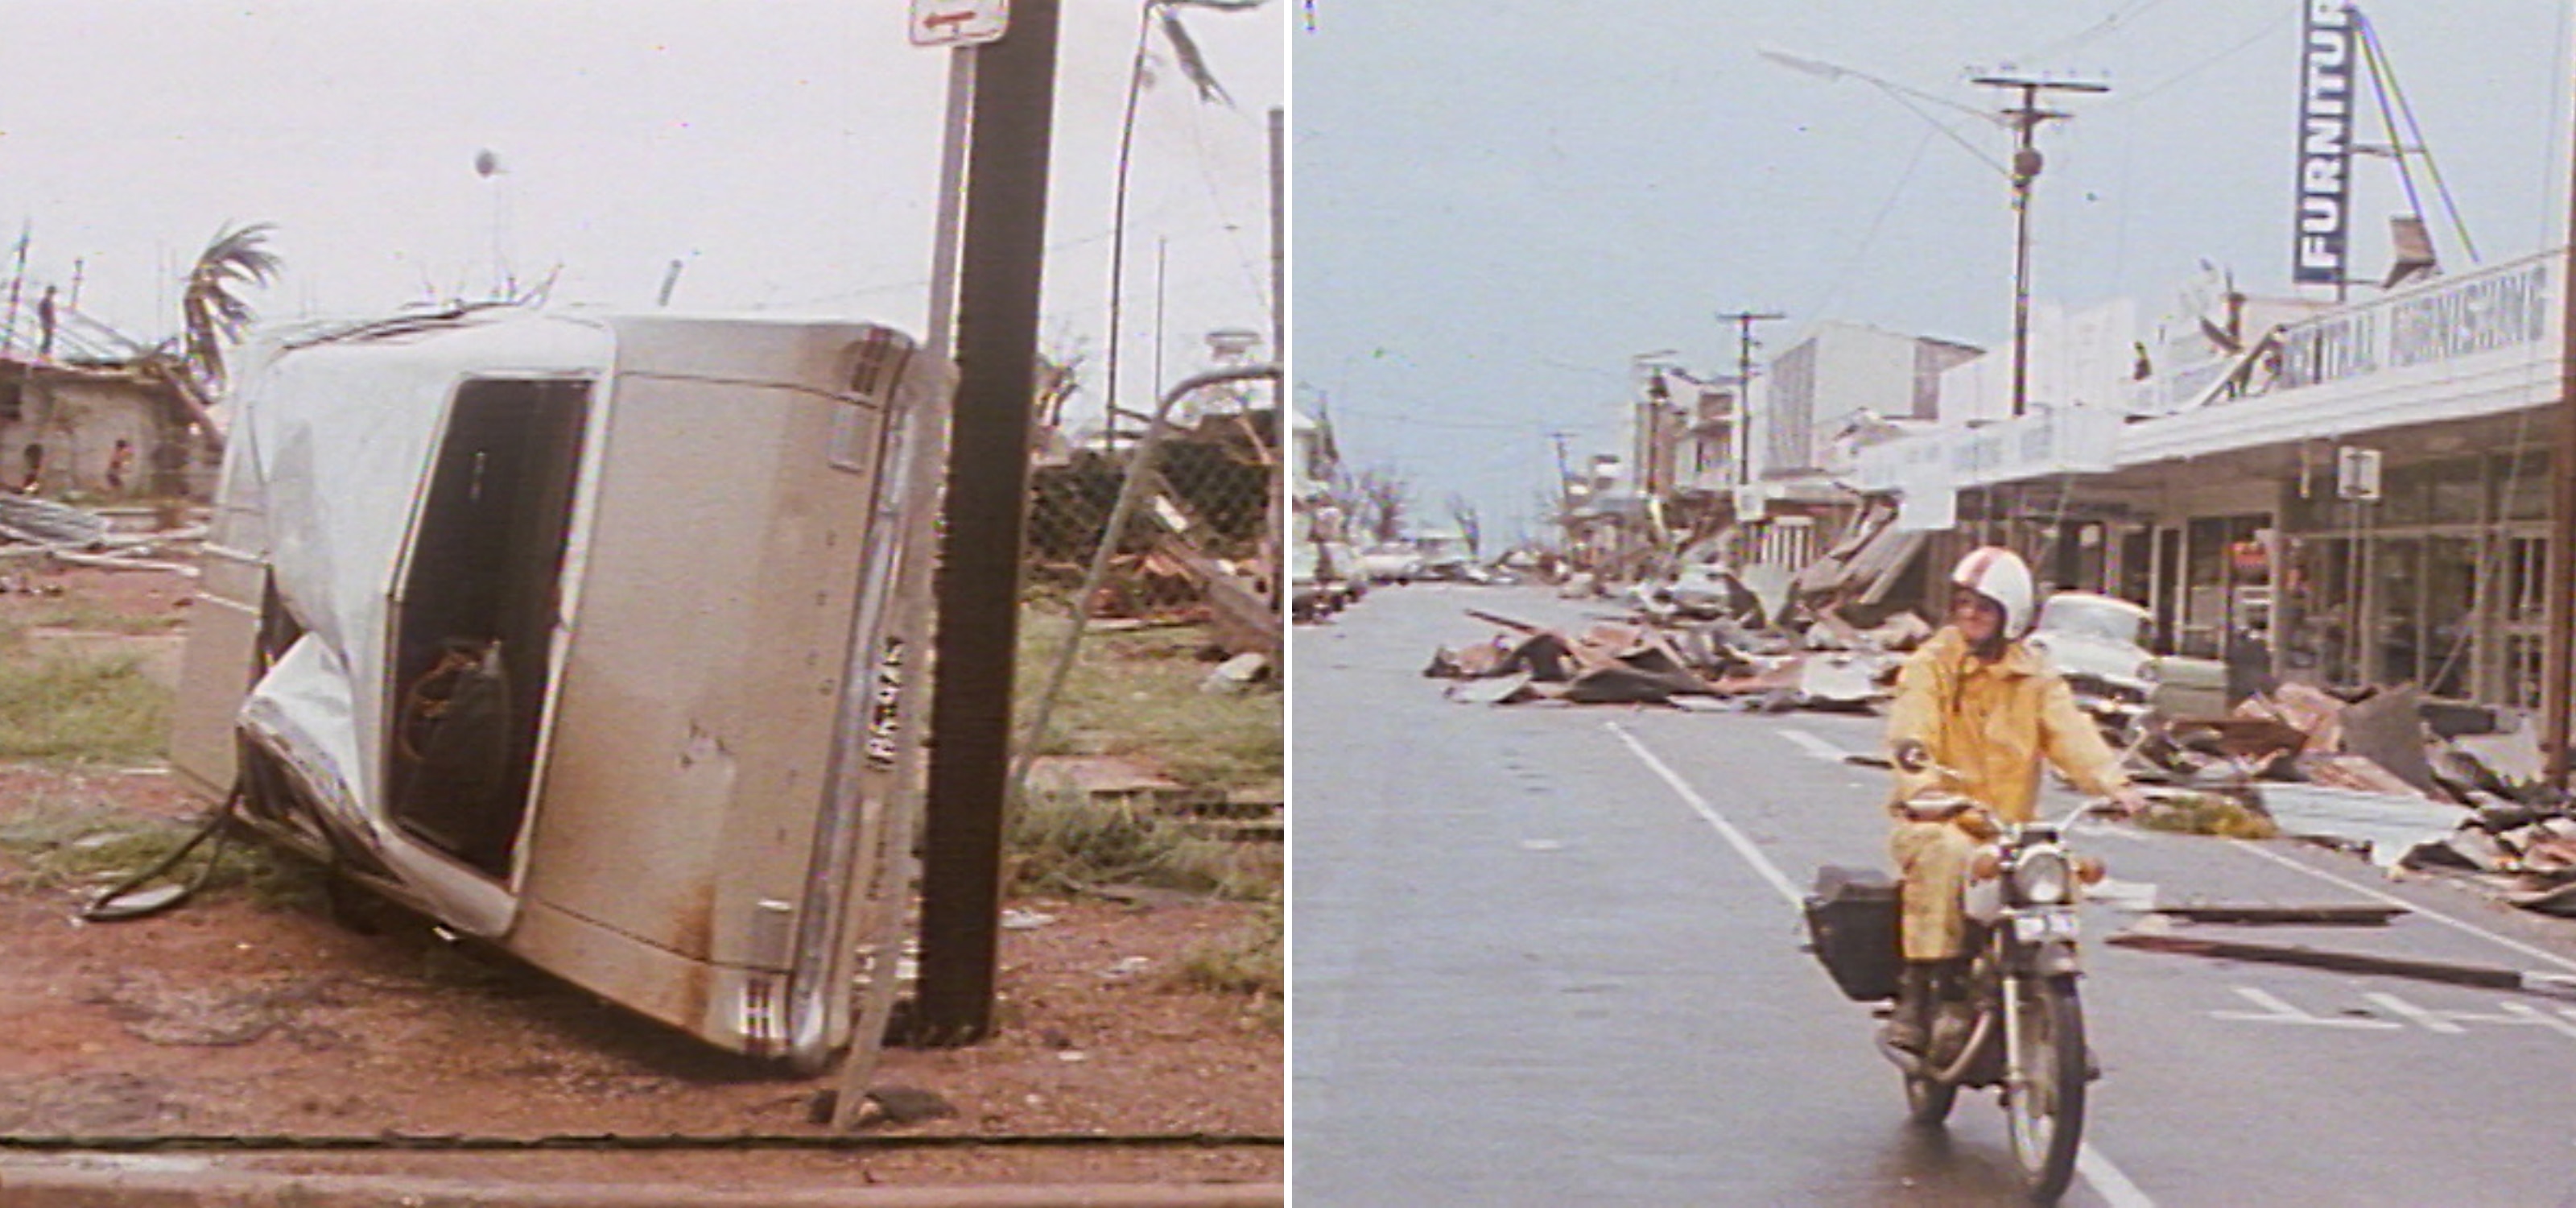 1970s sedan lies on its side next to a power pole. Man on a posty bike rides down street strewn with debris